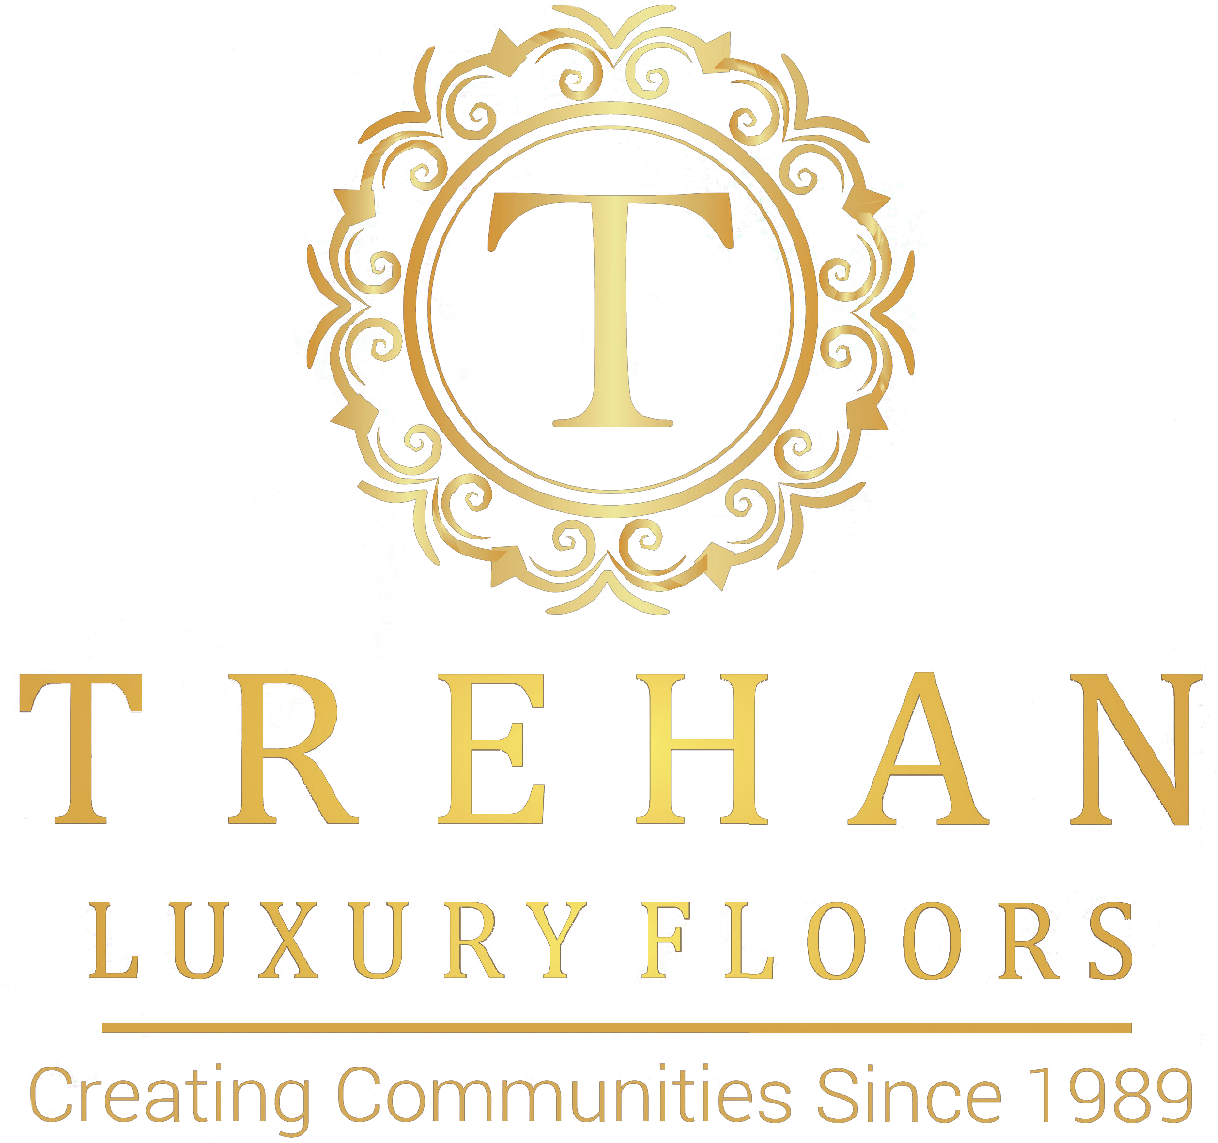 Trehan Group